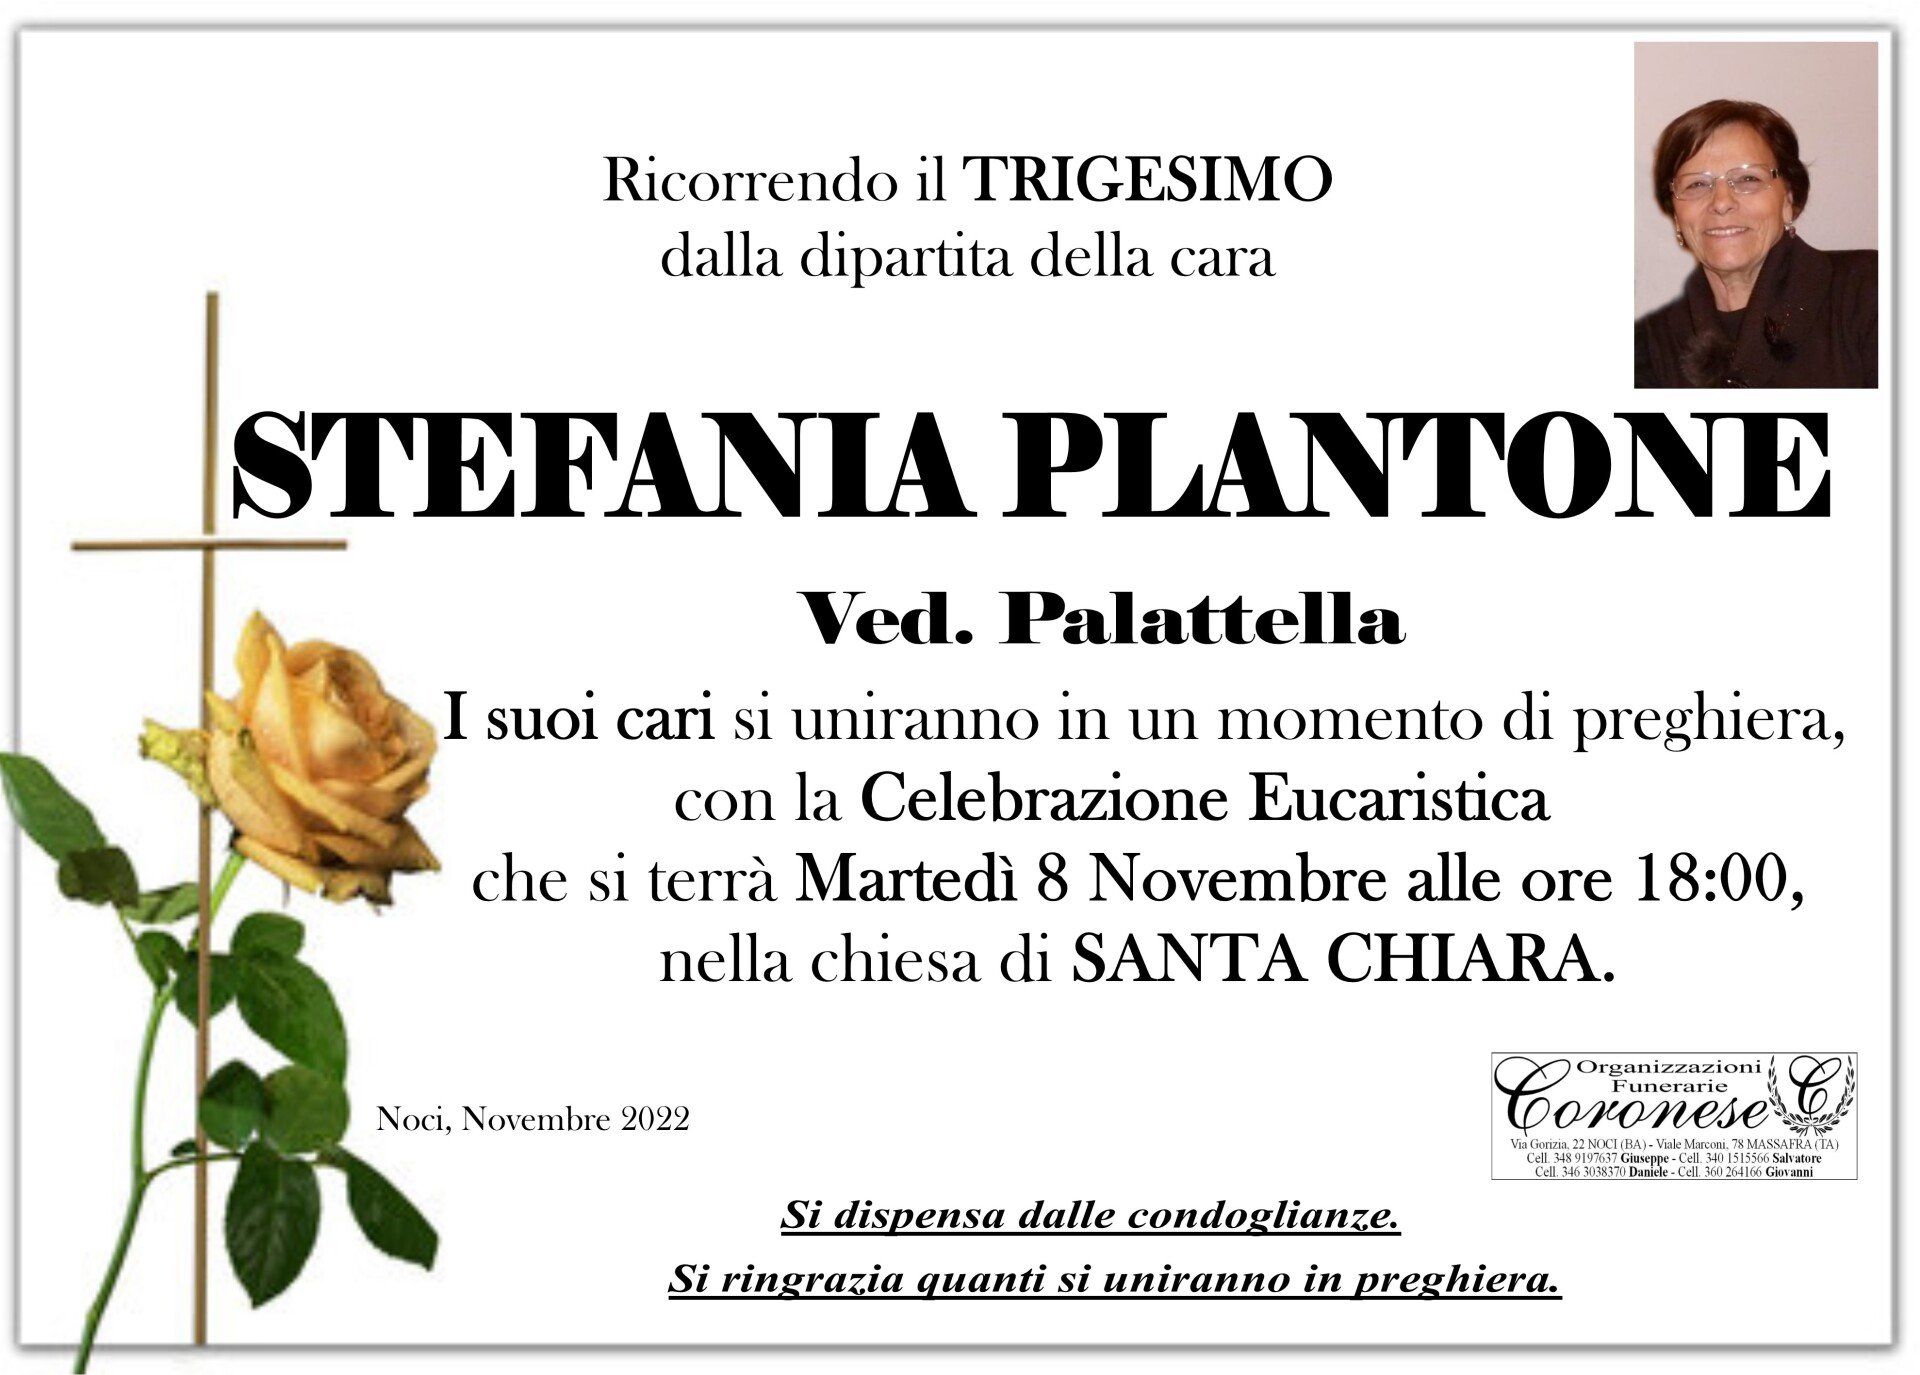 necrologio STEFANIA PLANTONE Ved. Palattella